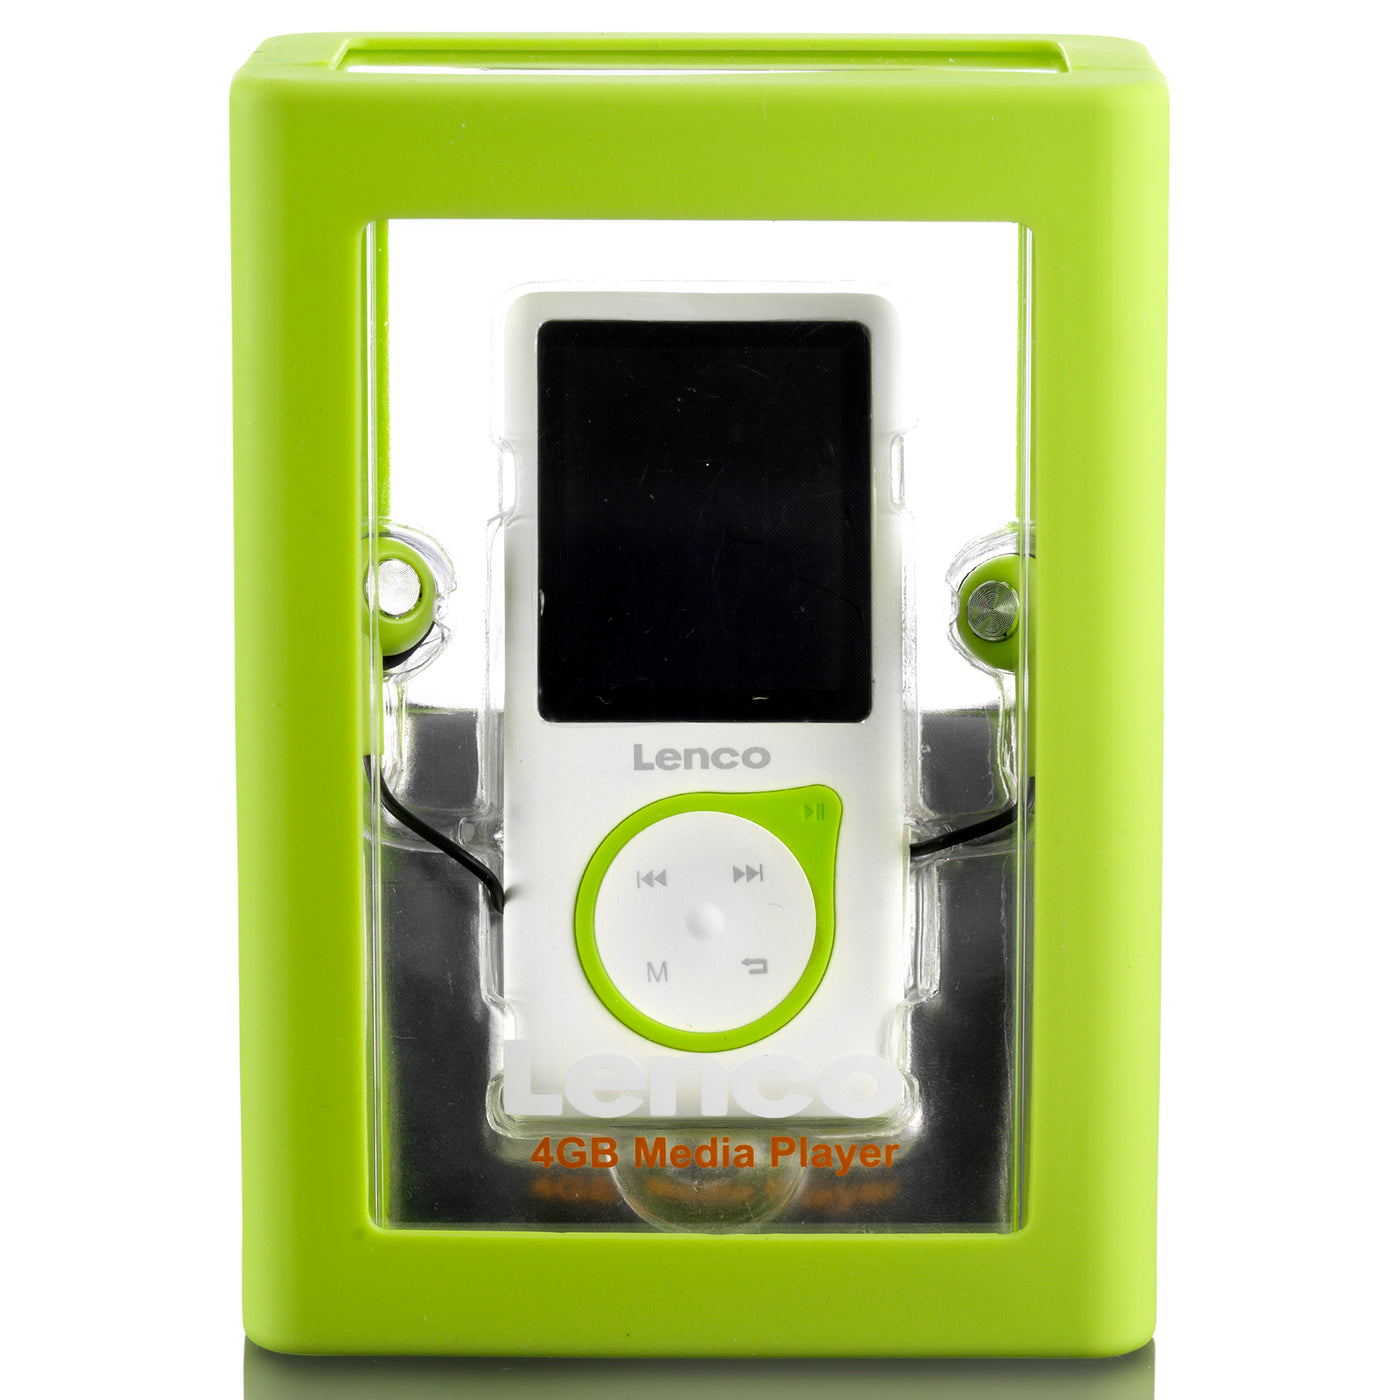 LENCO Xemio-668 Lime - MP3/MP4 player Incl. 8GB micro SD card - Lime